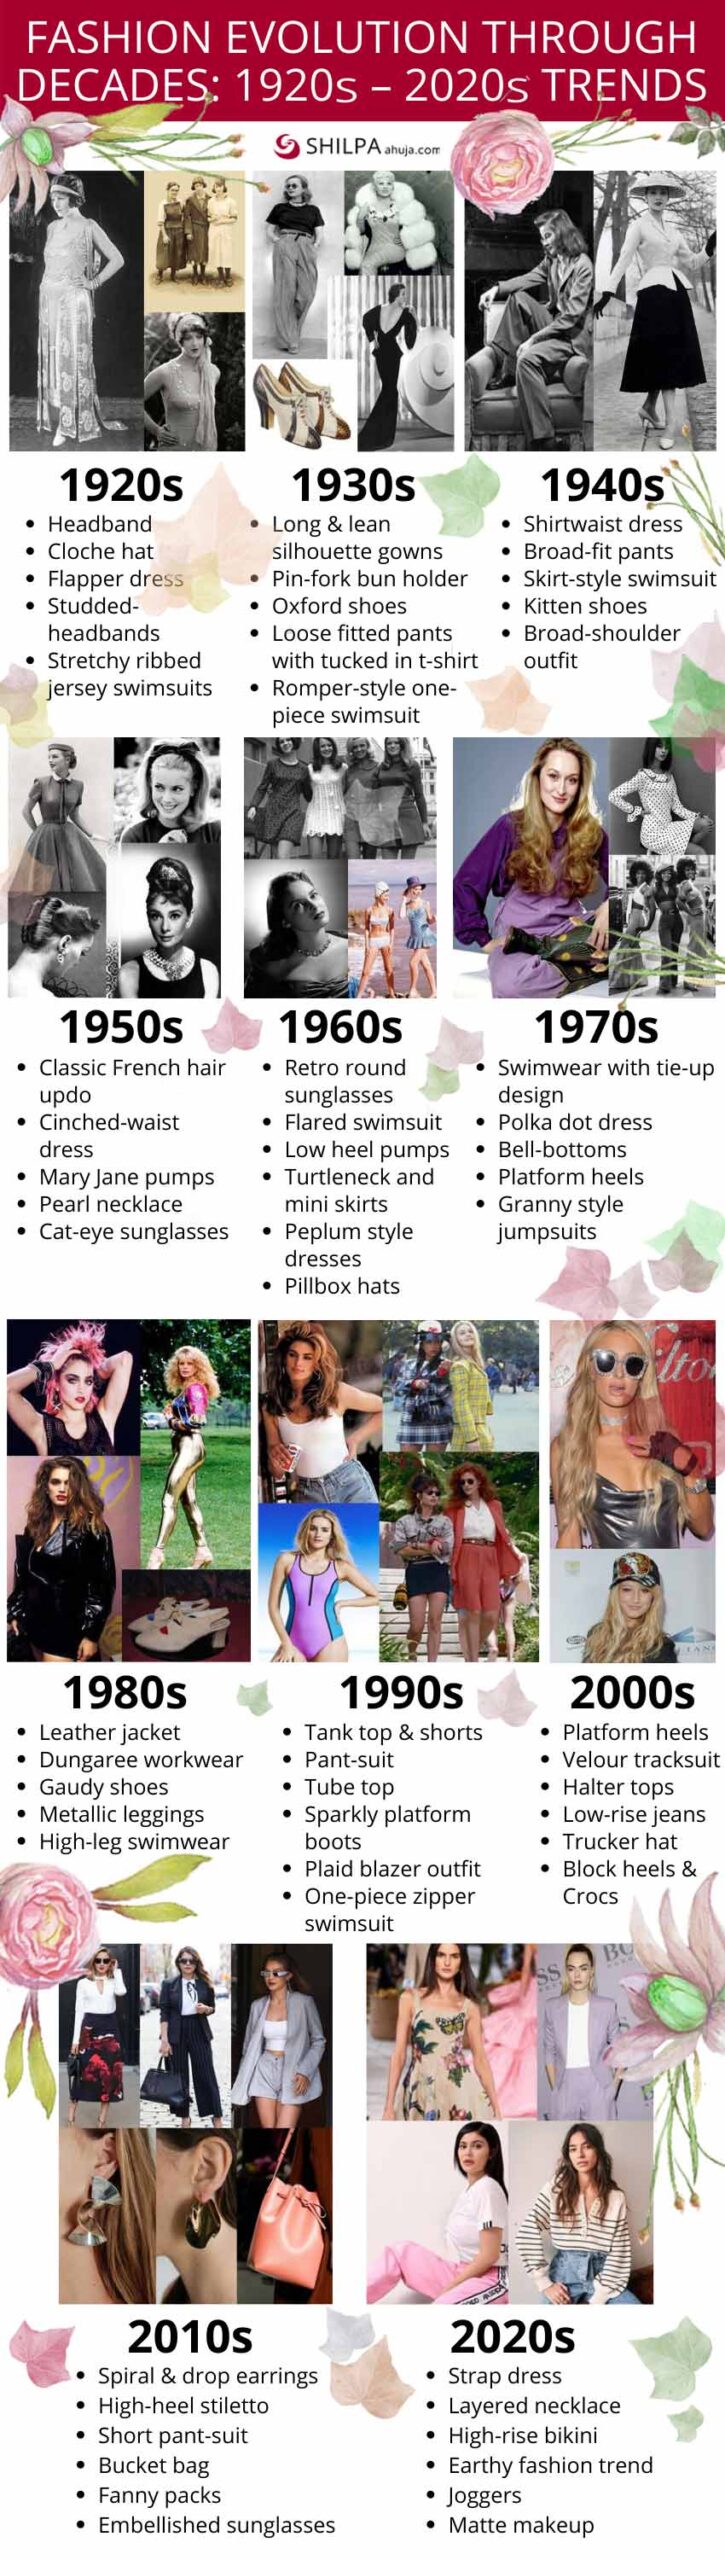 Fashion-Evolution-Decades-Trends-styles history